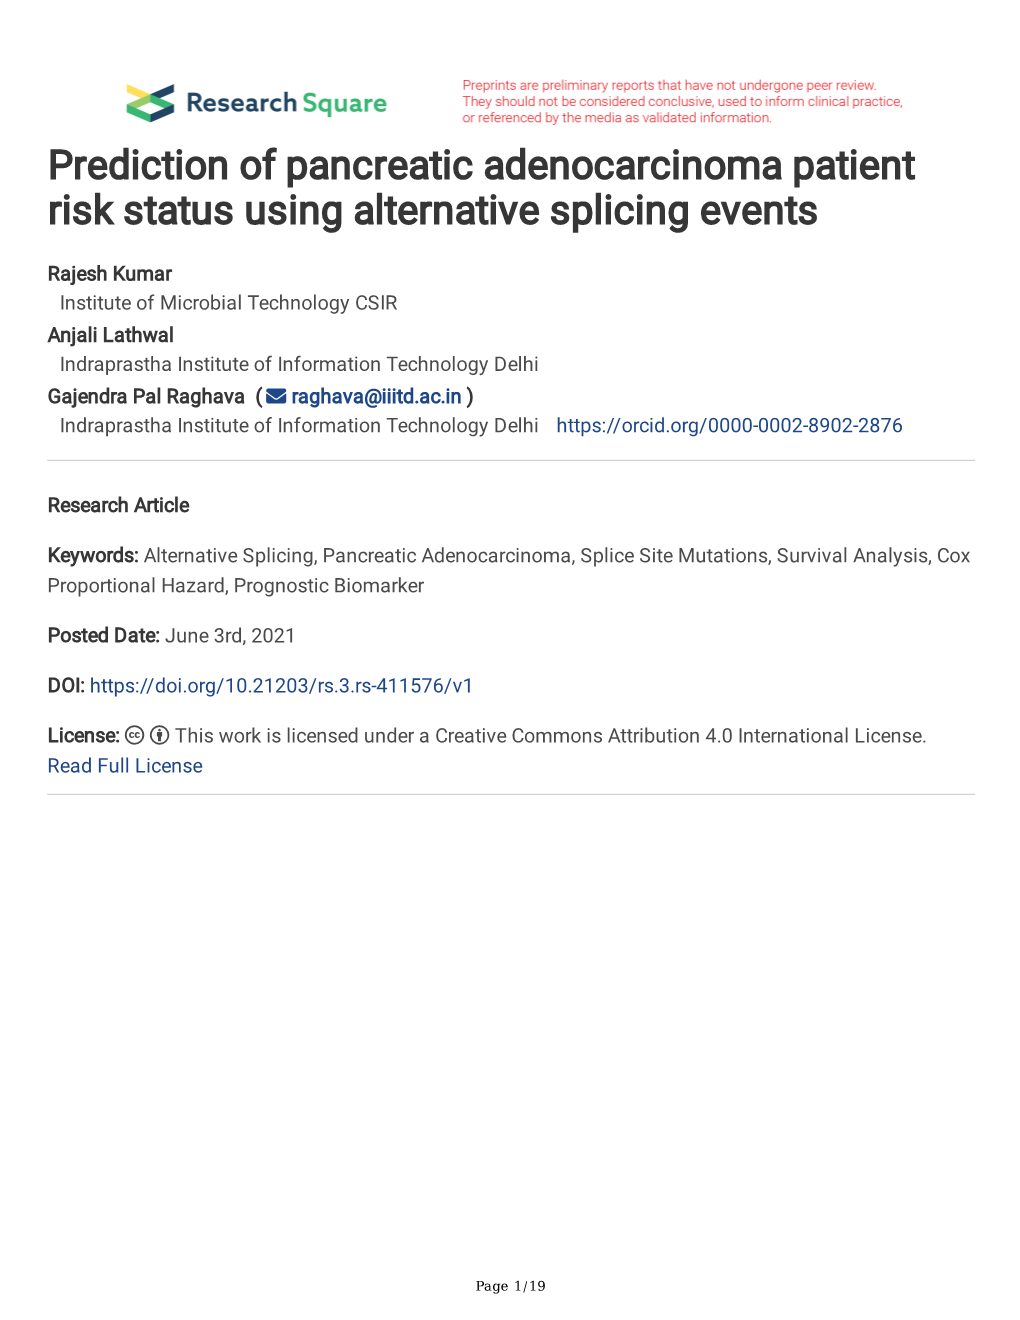 Prediction of Pancreatic Adenocarcinoma Patient Risk Status Using Alternative Splicing Events